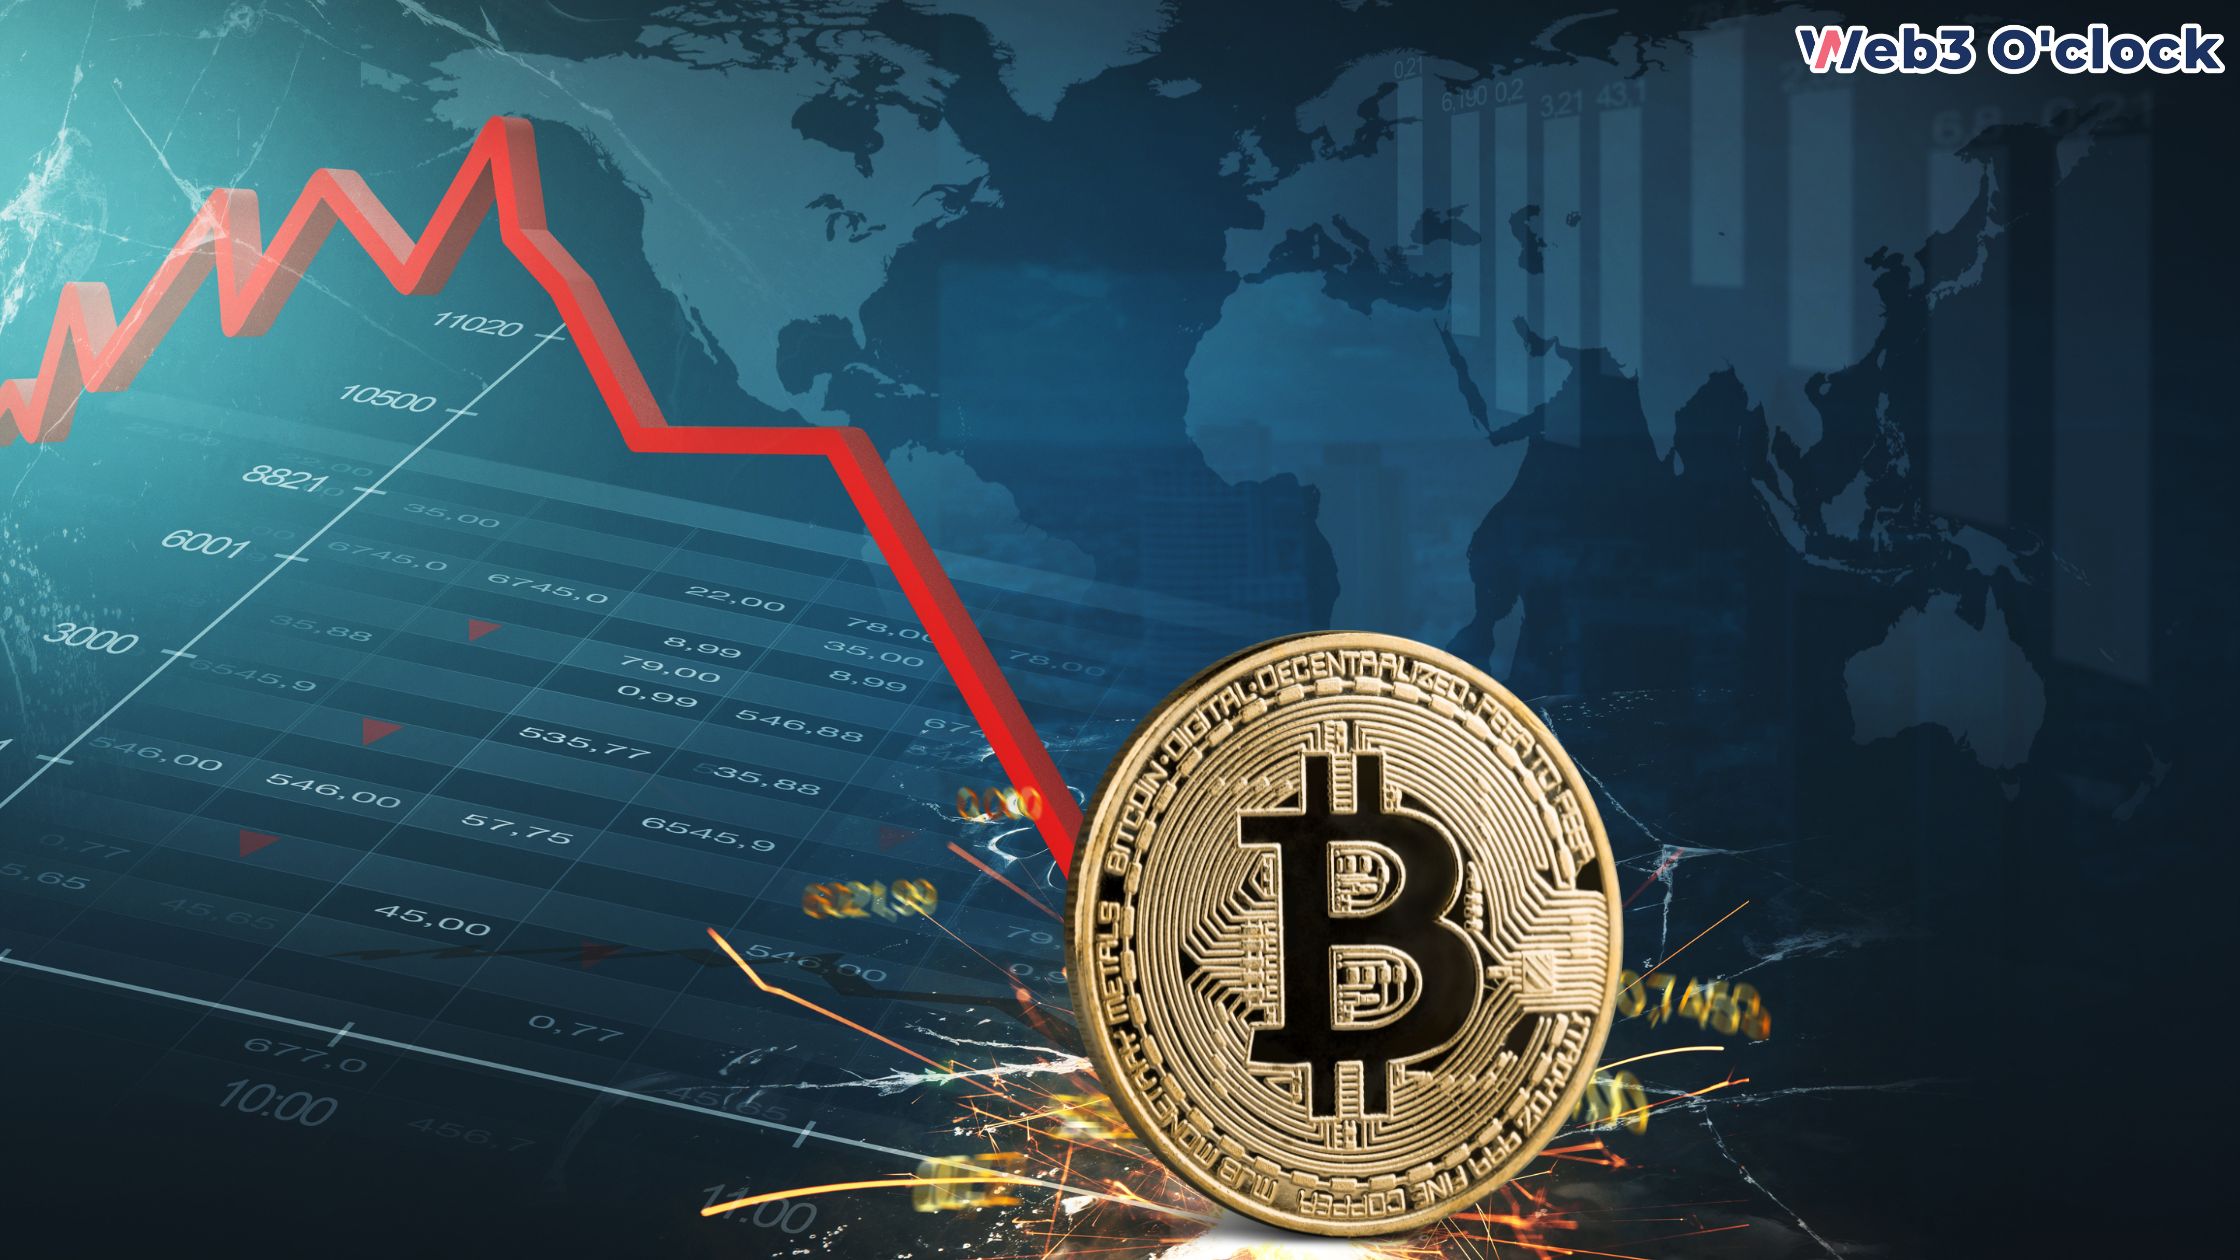 Bitcoin Crashes to $65K by web3 o'clock